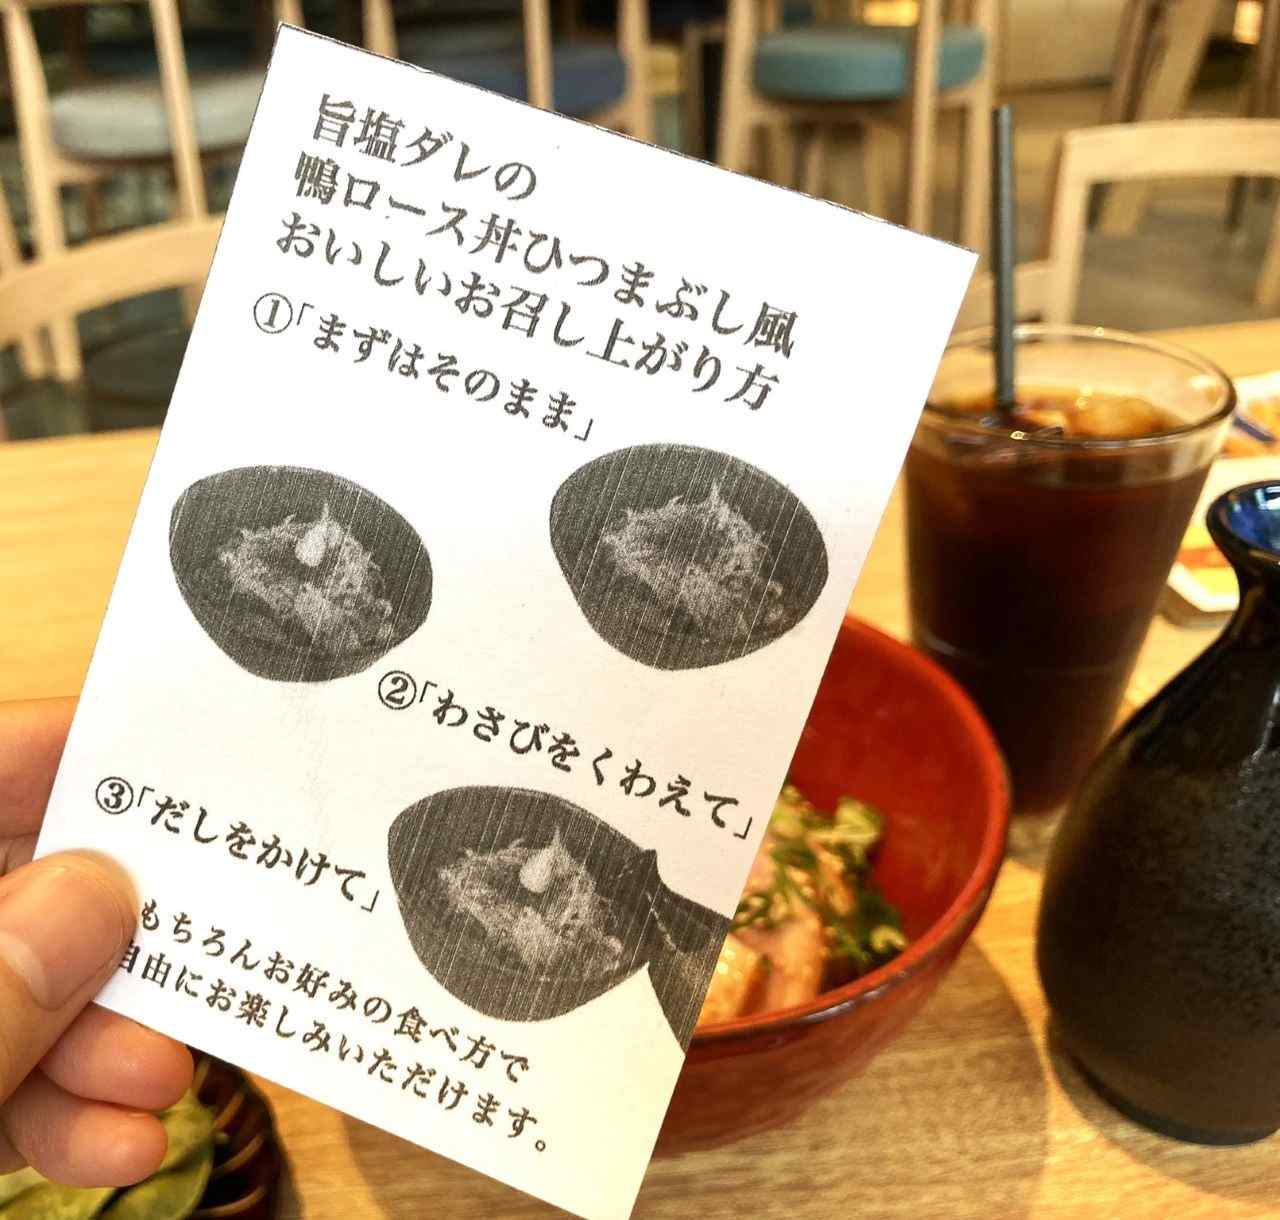 Unir京都店「旨塩ダレの鴨ロース丼ひつまぶし風」